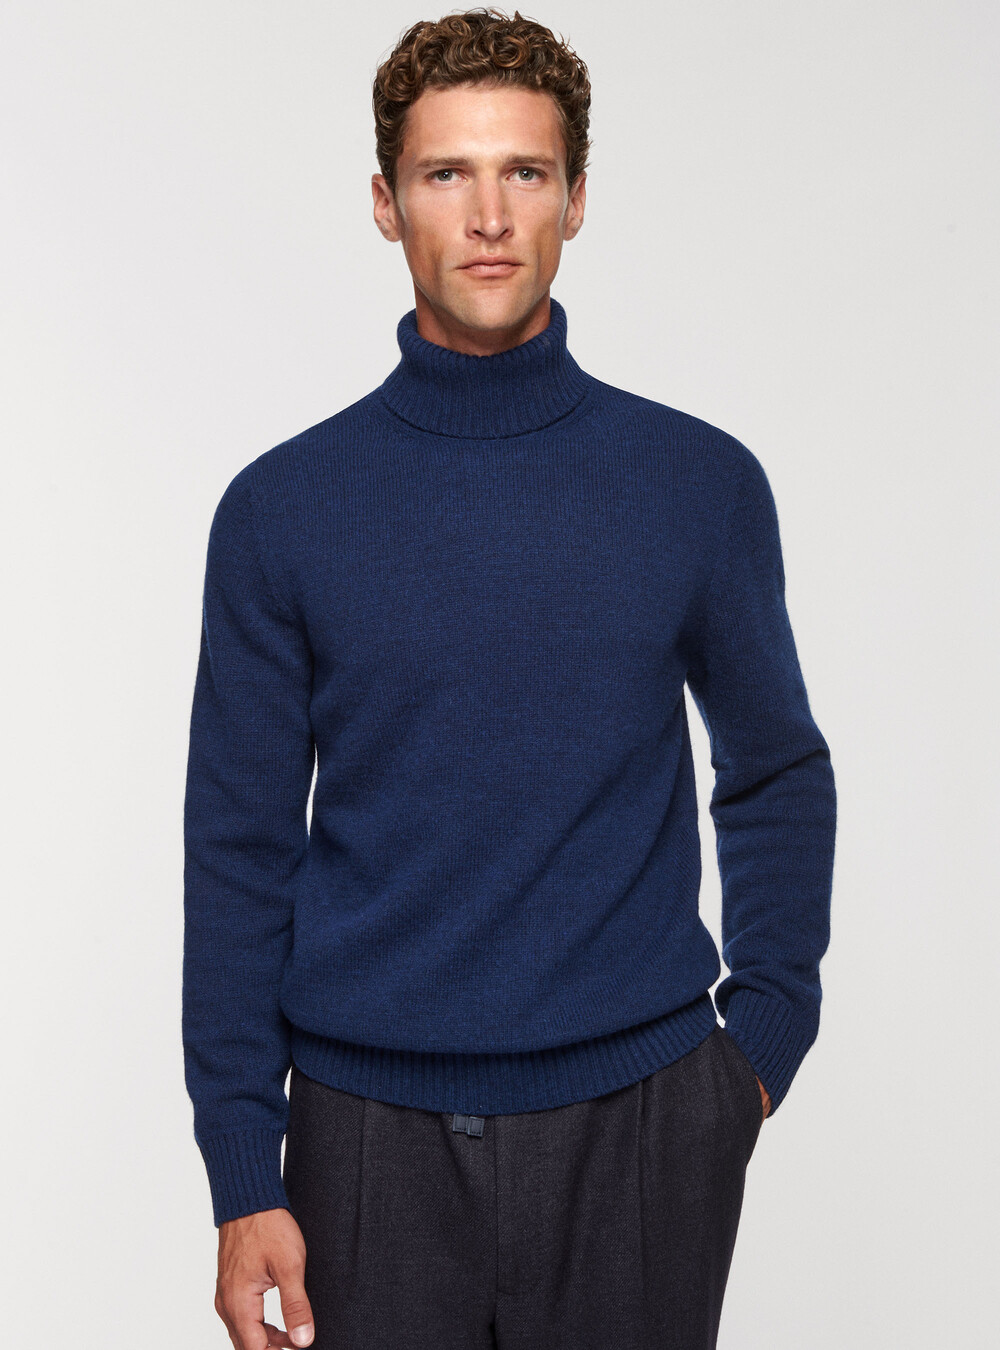 Wool-blend sweater | GutteridgeUS | Men's catalog-gutteridge-storefront